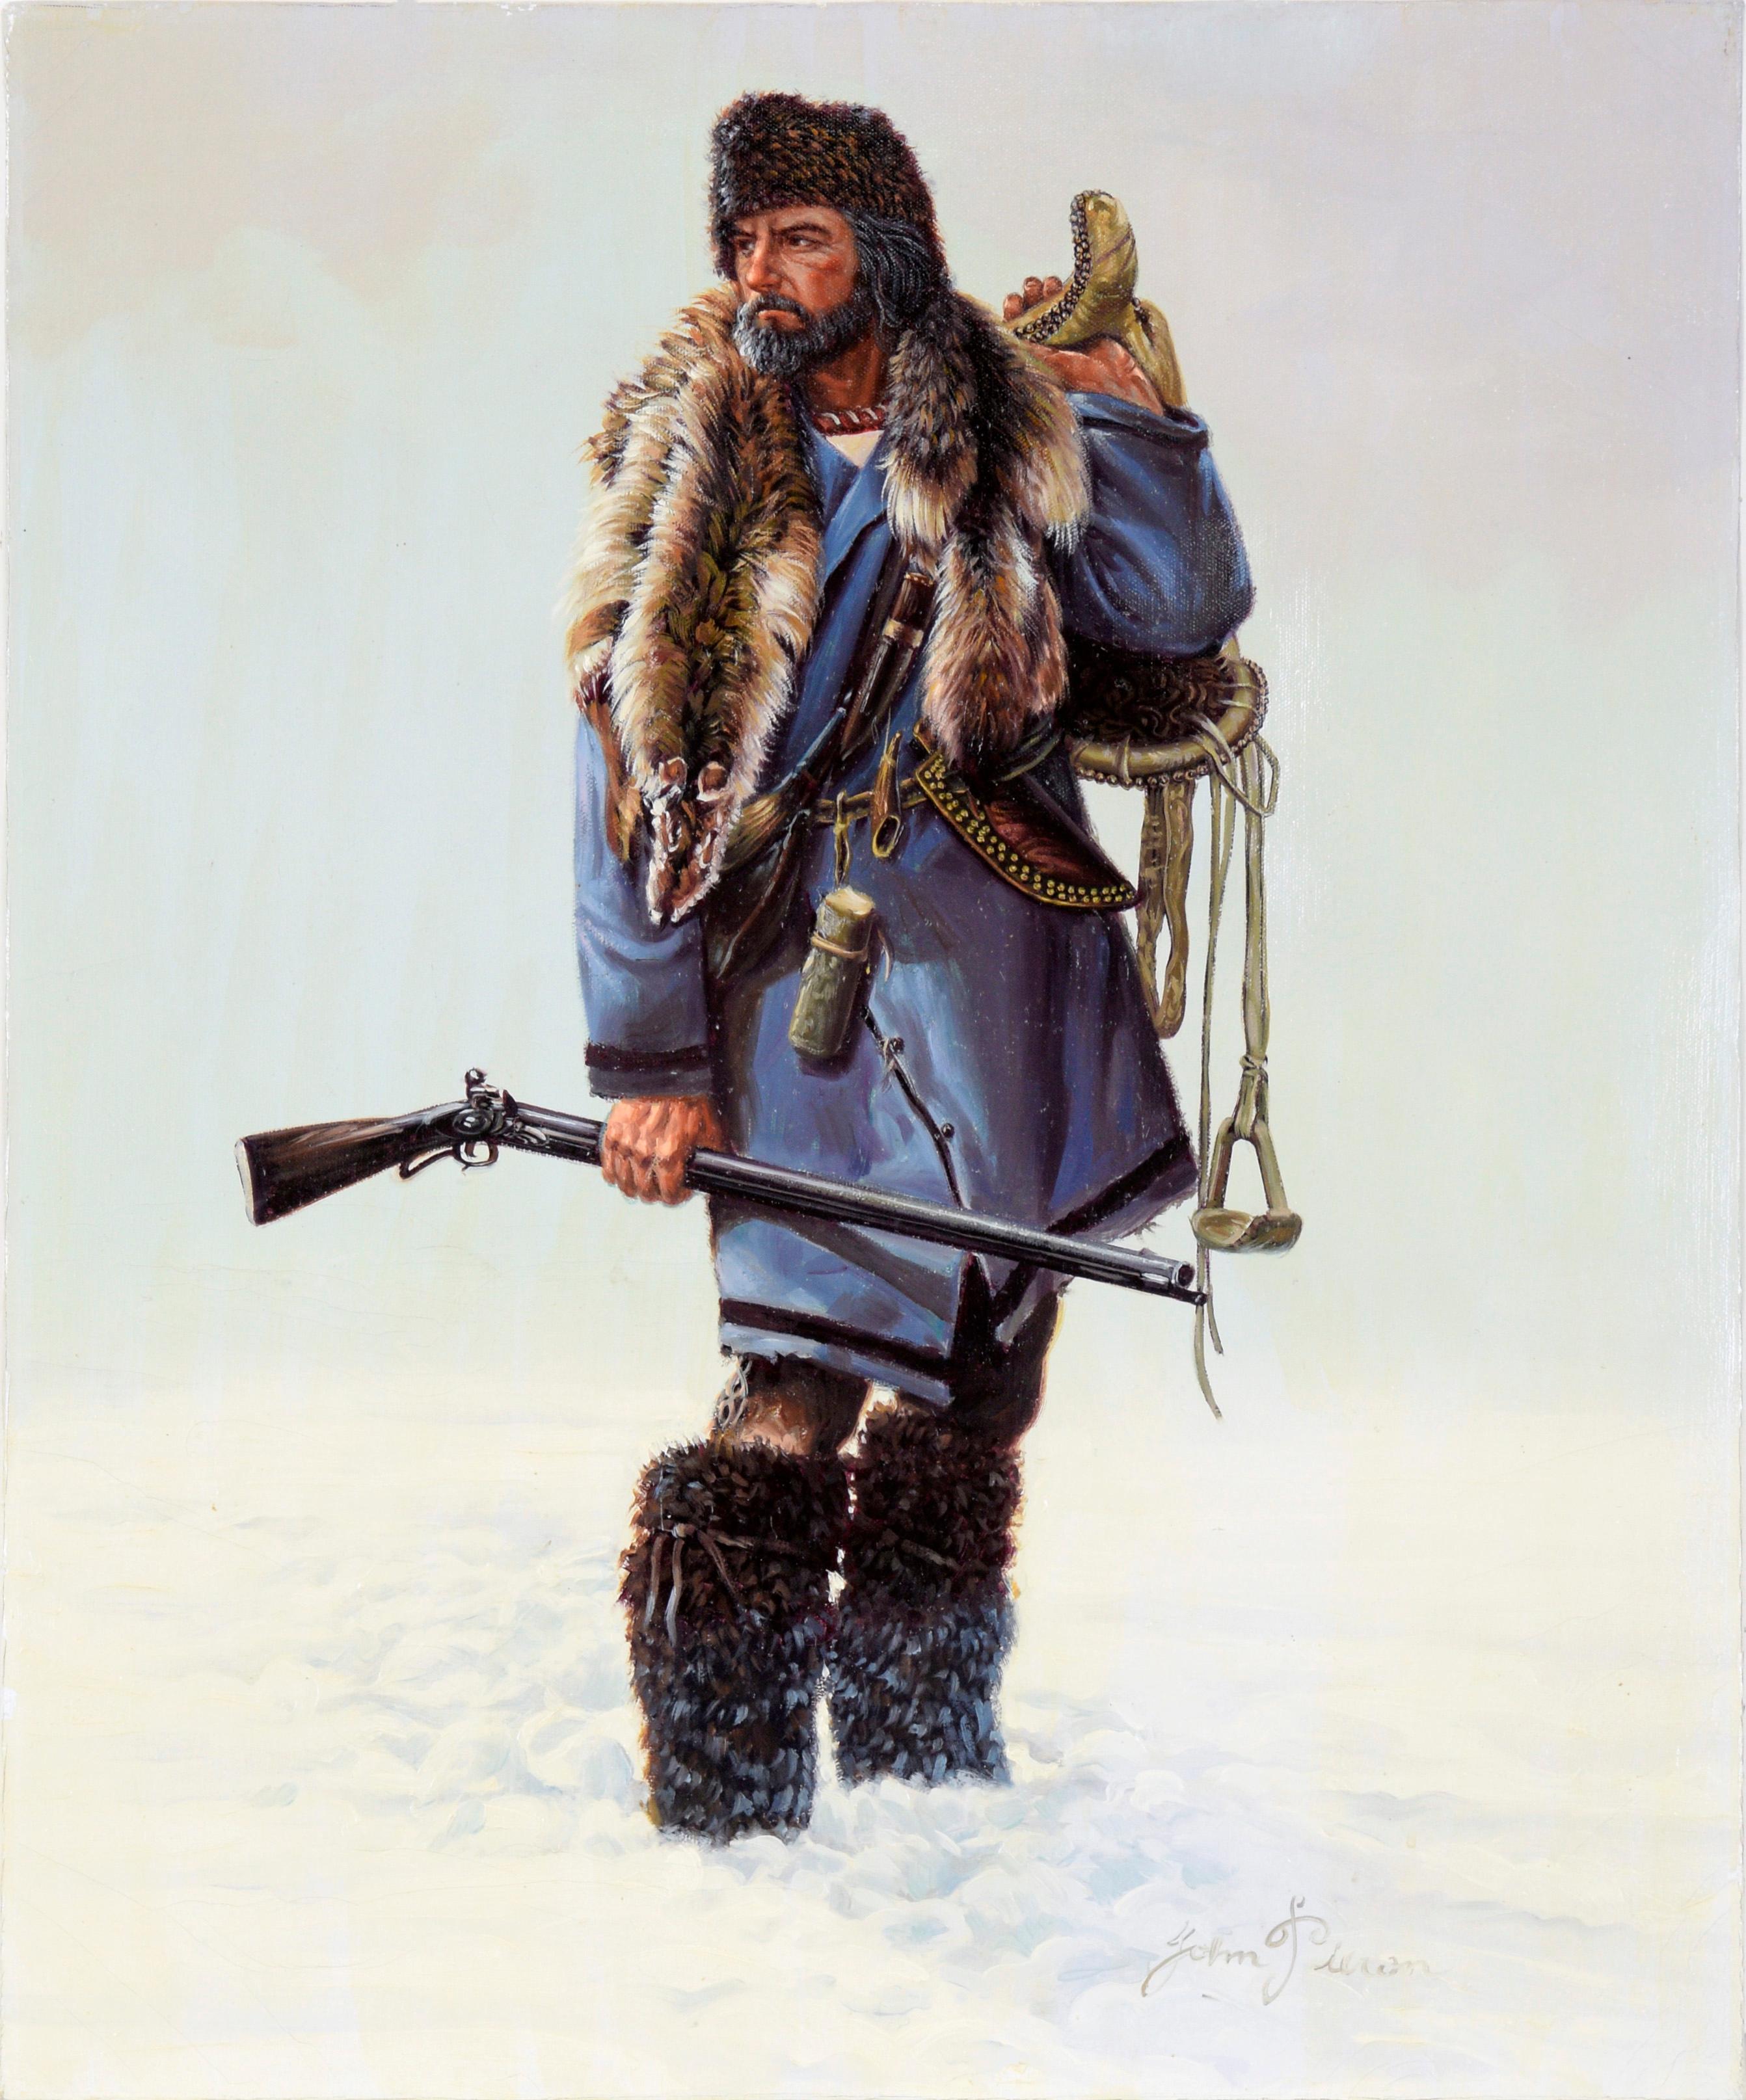 John Pieron Portrait Painting – Fur Trapper in Winter – Porträt in Öl auf Leinwand